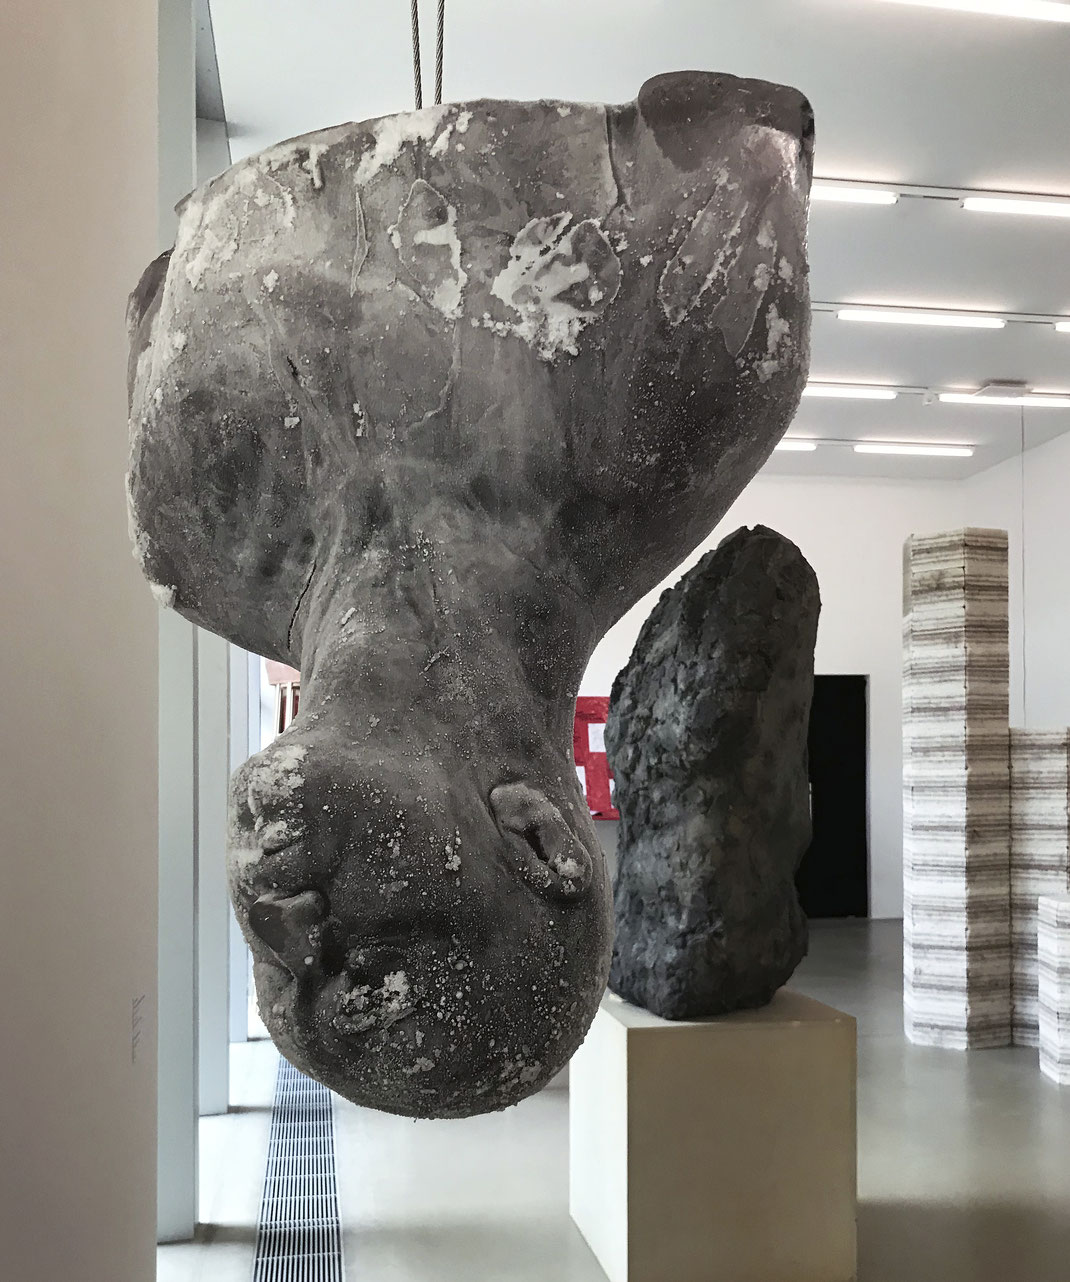 the-human-body-in-contemporary-art-performative-sculpture-franticek-klossner-swiss-sculpture-aargauer-kunsthaus